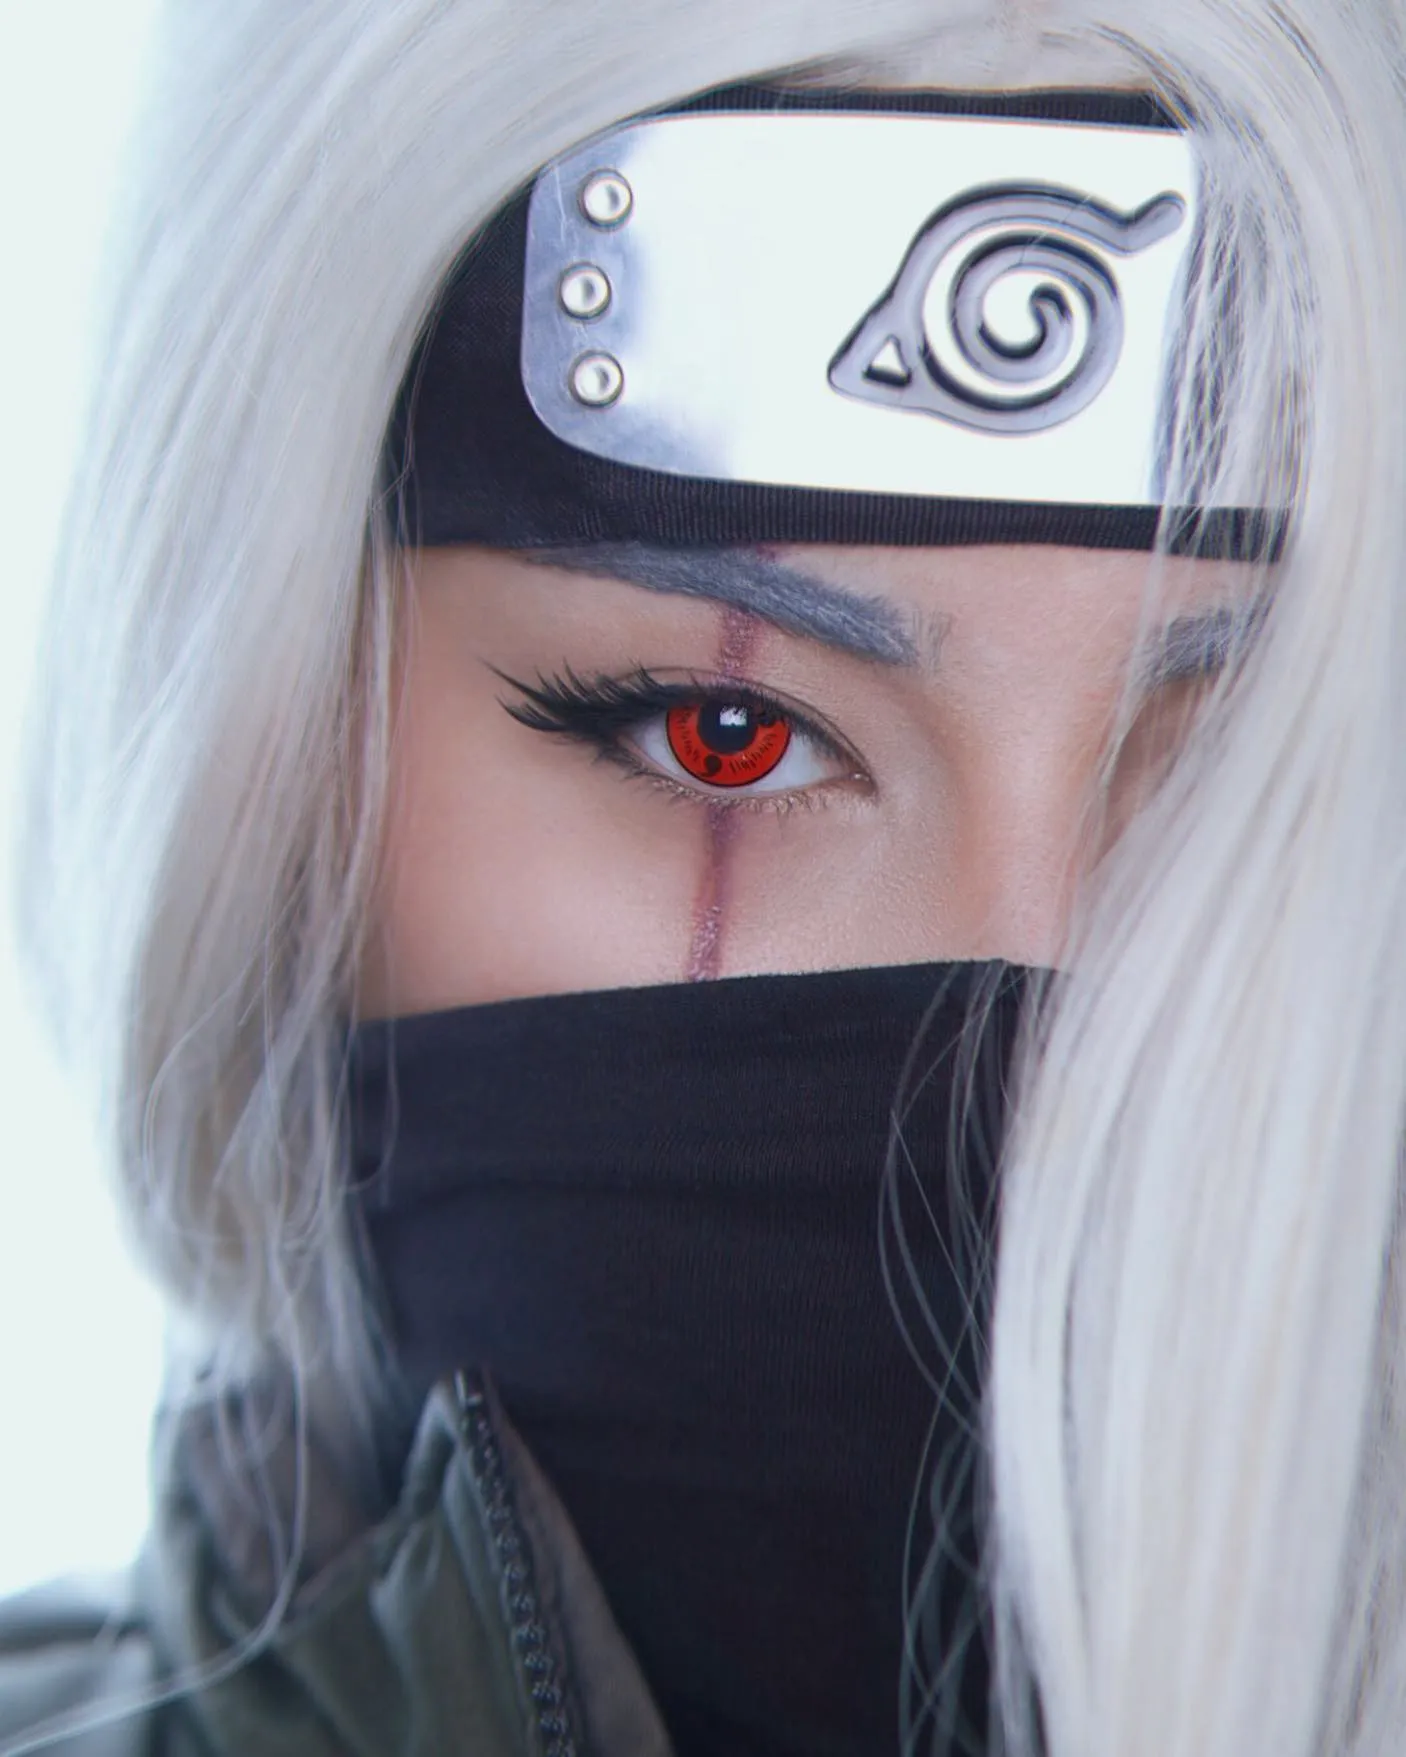 【U.S Warehouse】Mislens Uchiha Red Sasuke Cosplay color contact Lenses for dark brown eyes